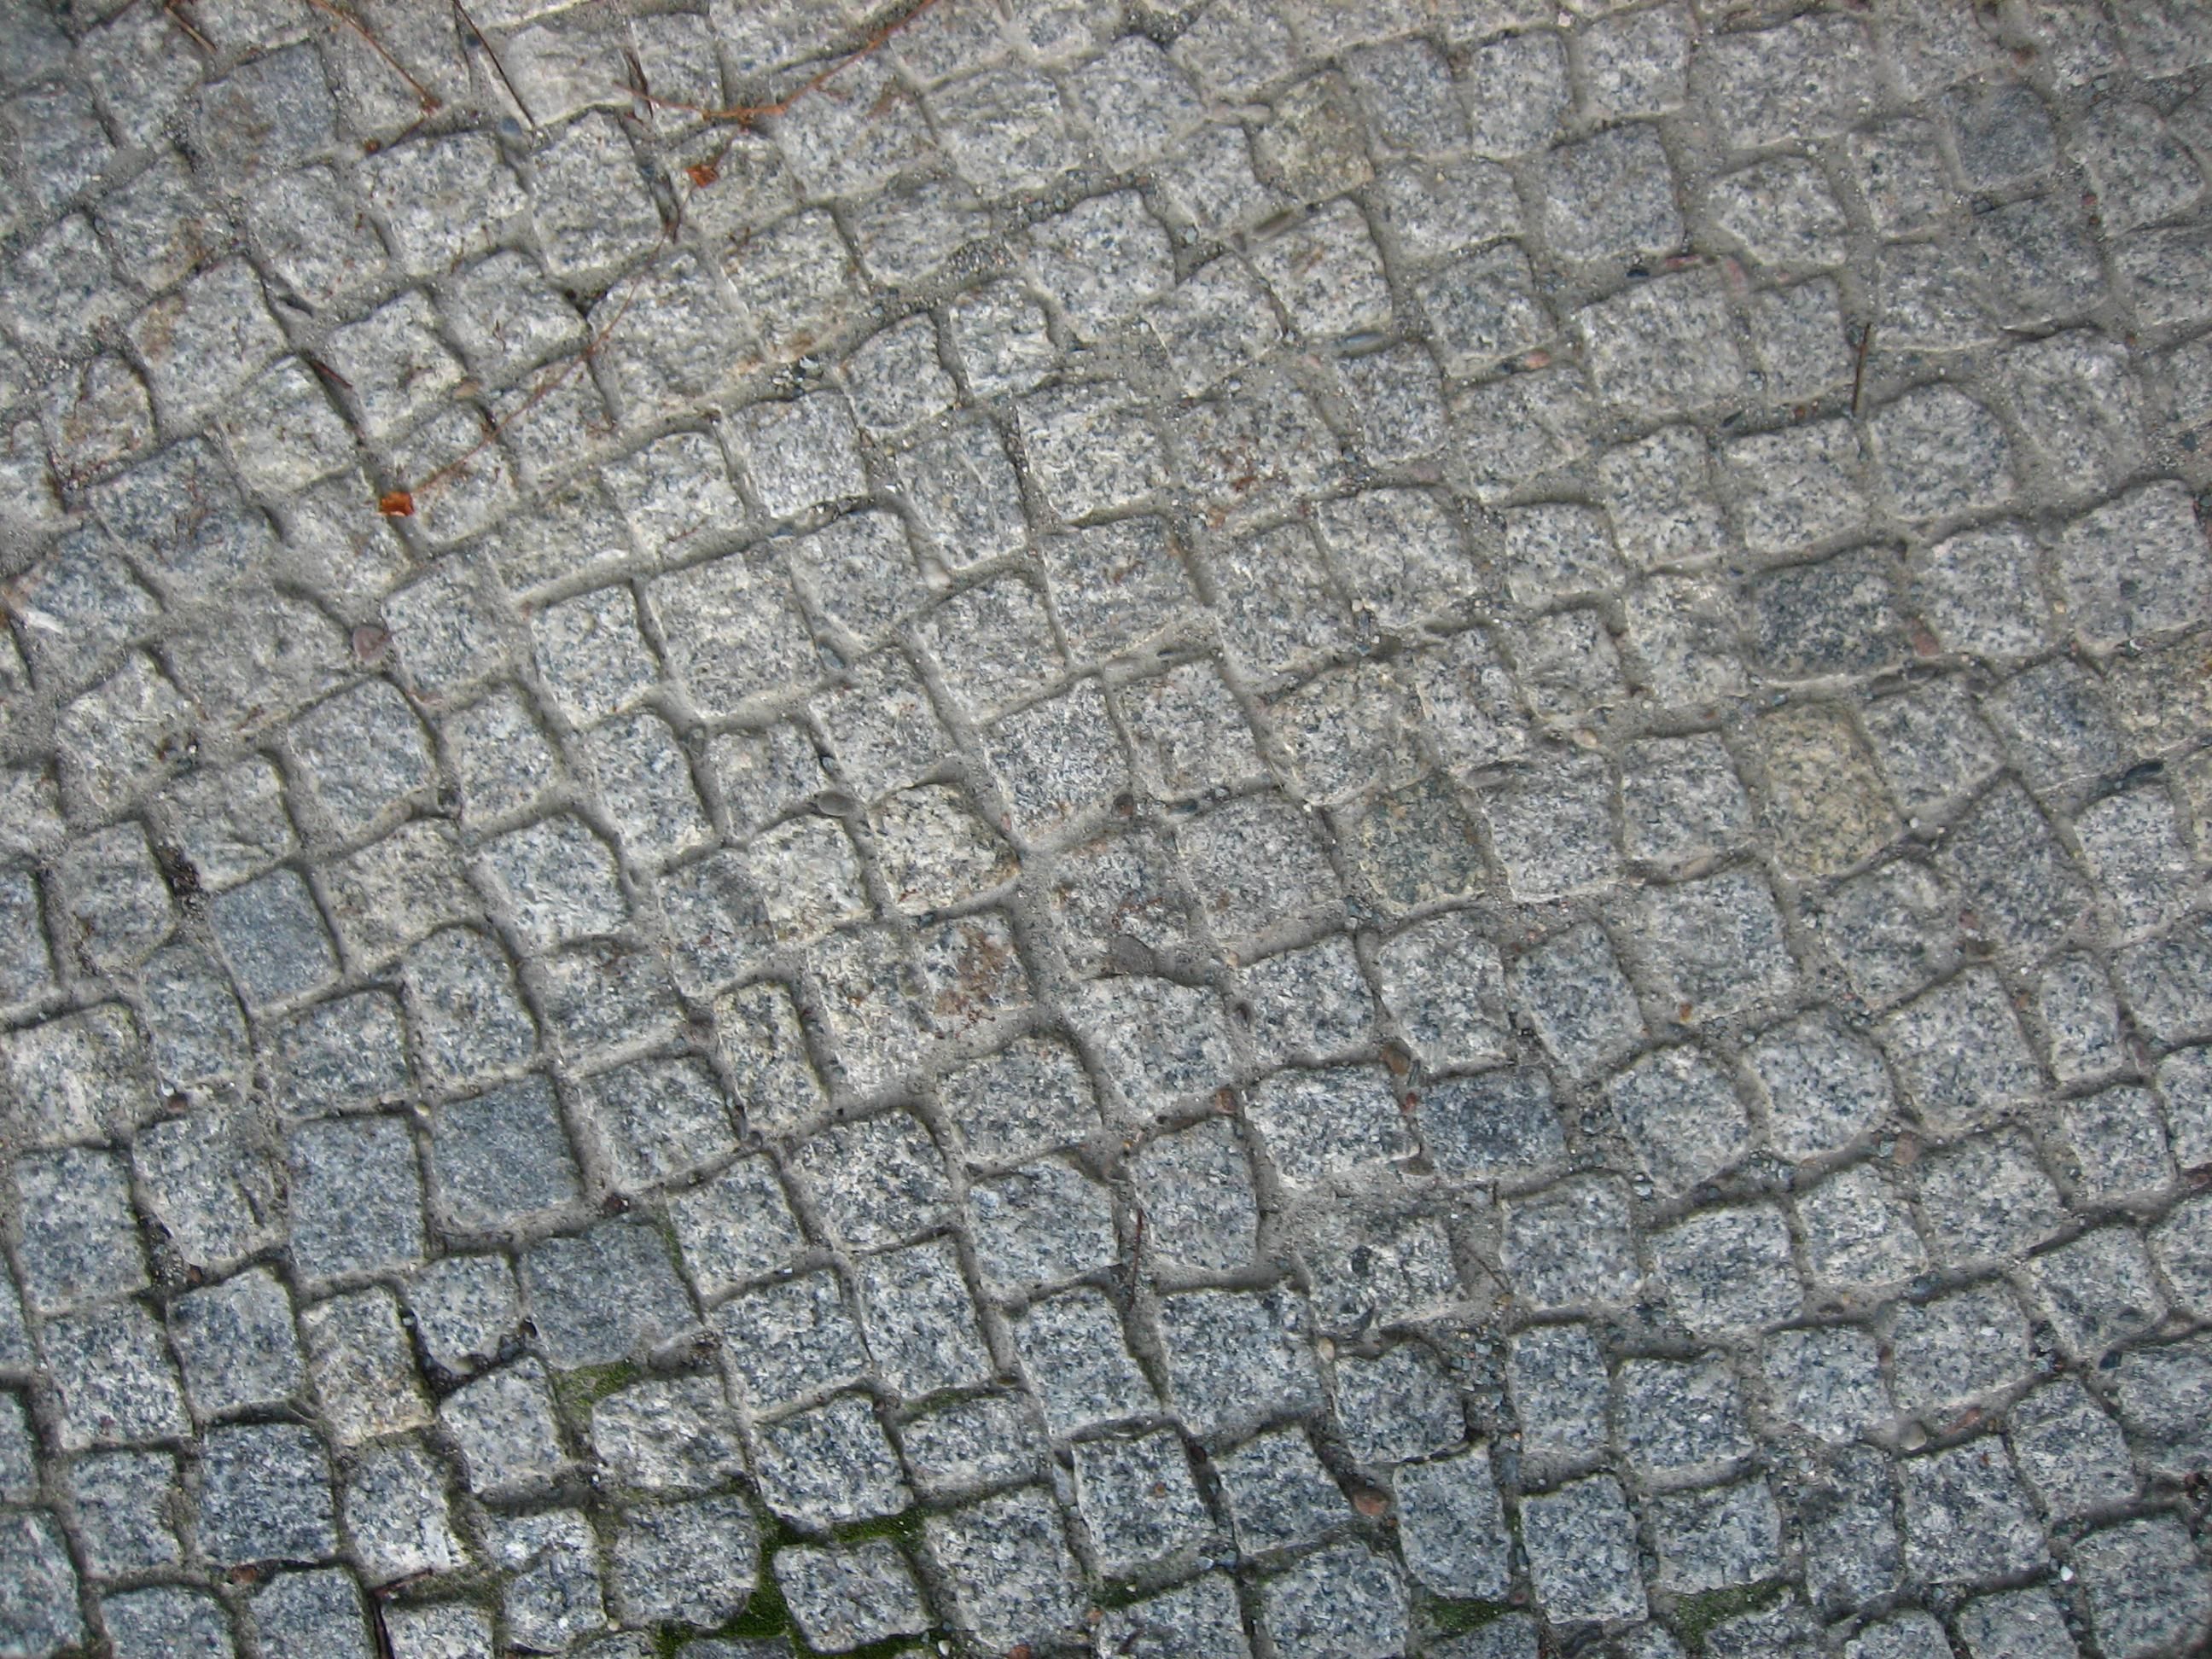 File:Paving stone.jpg - Wikimedia Commons